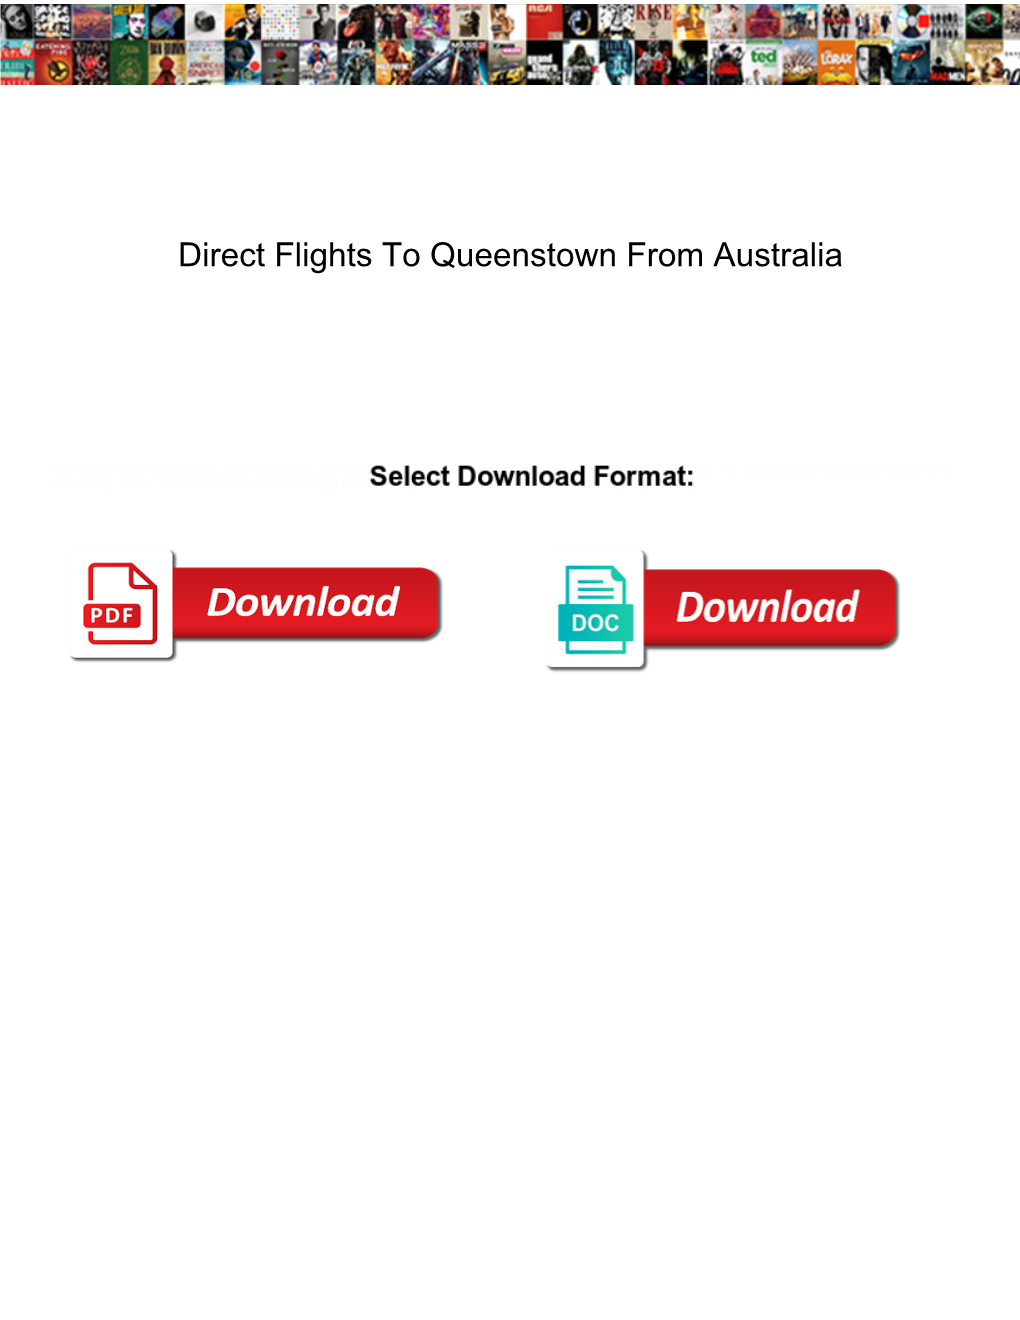 Direct Flights to Queenstown from Australia